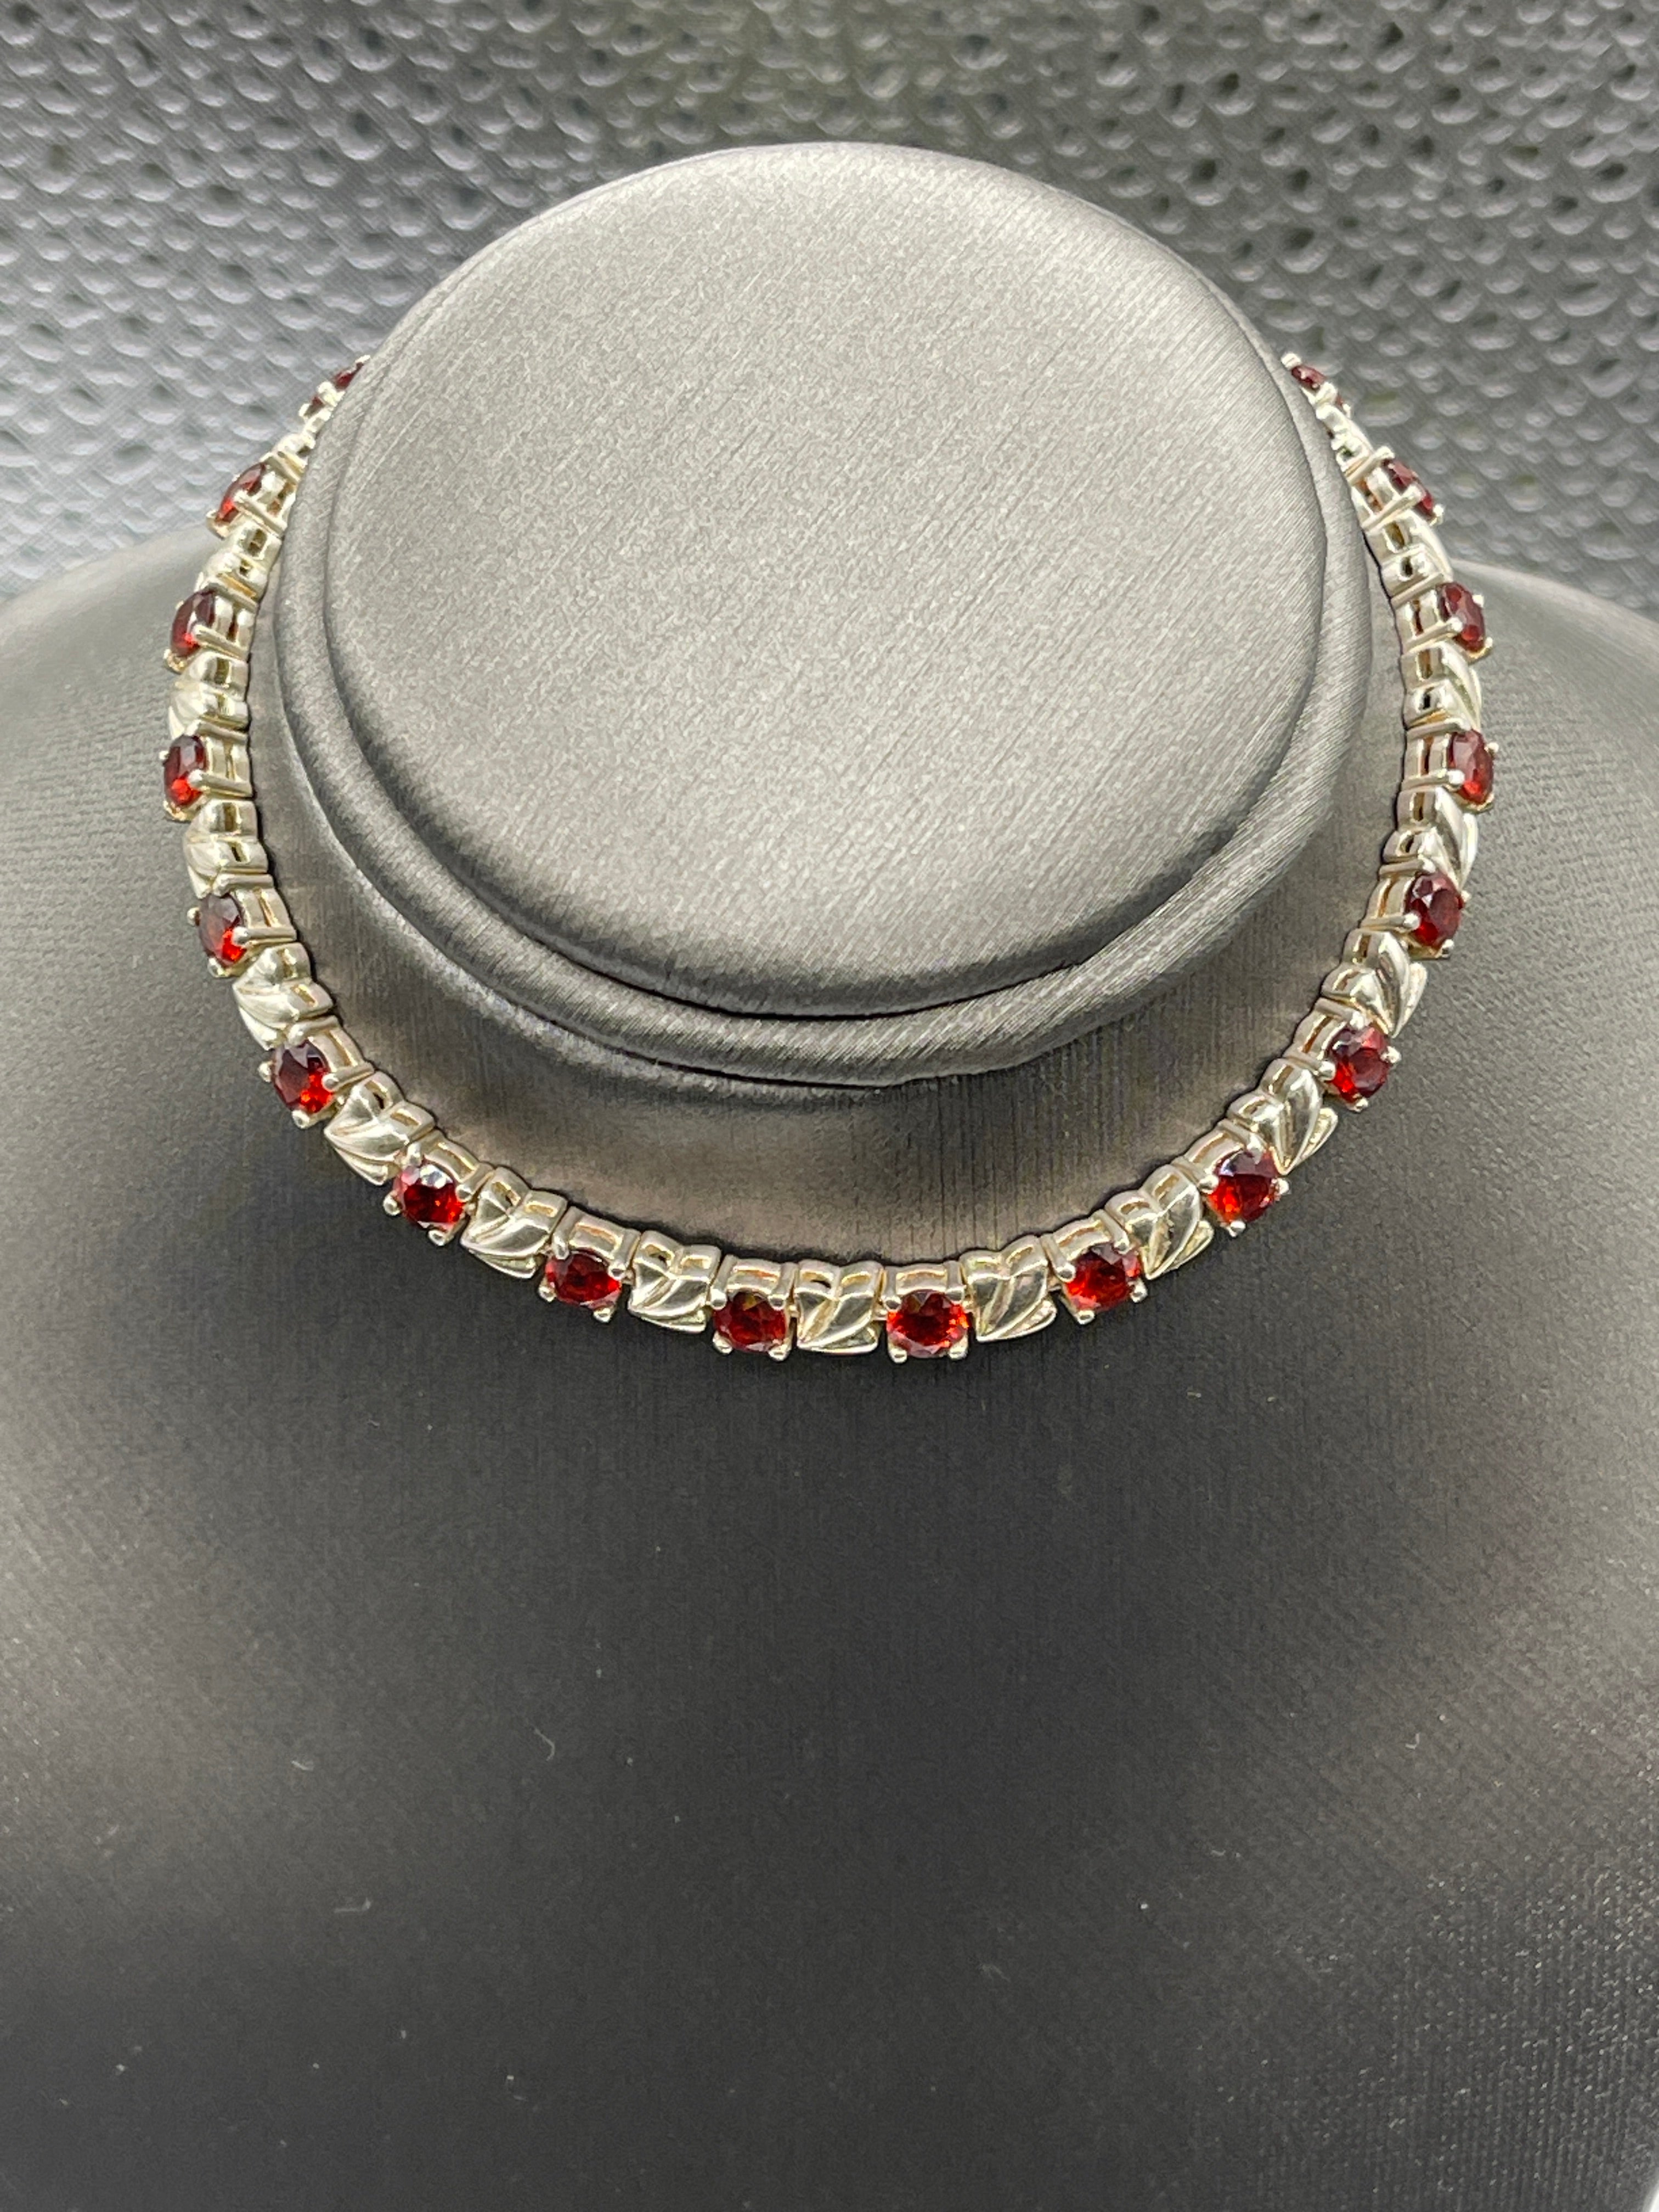 Vintage Style Silver & Garnet Bracelet | eBay